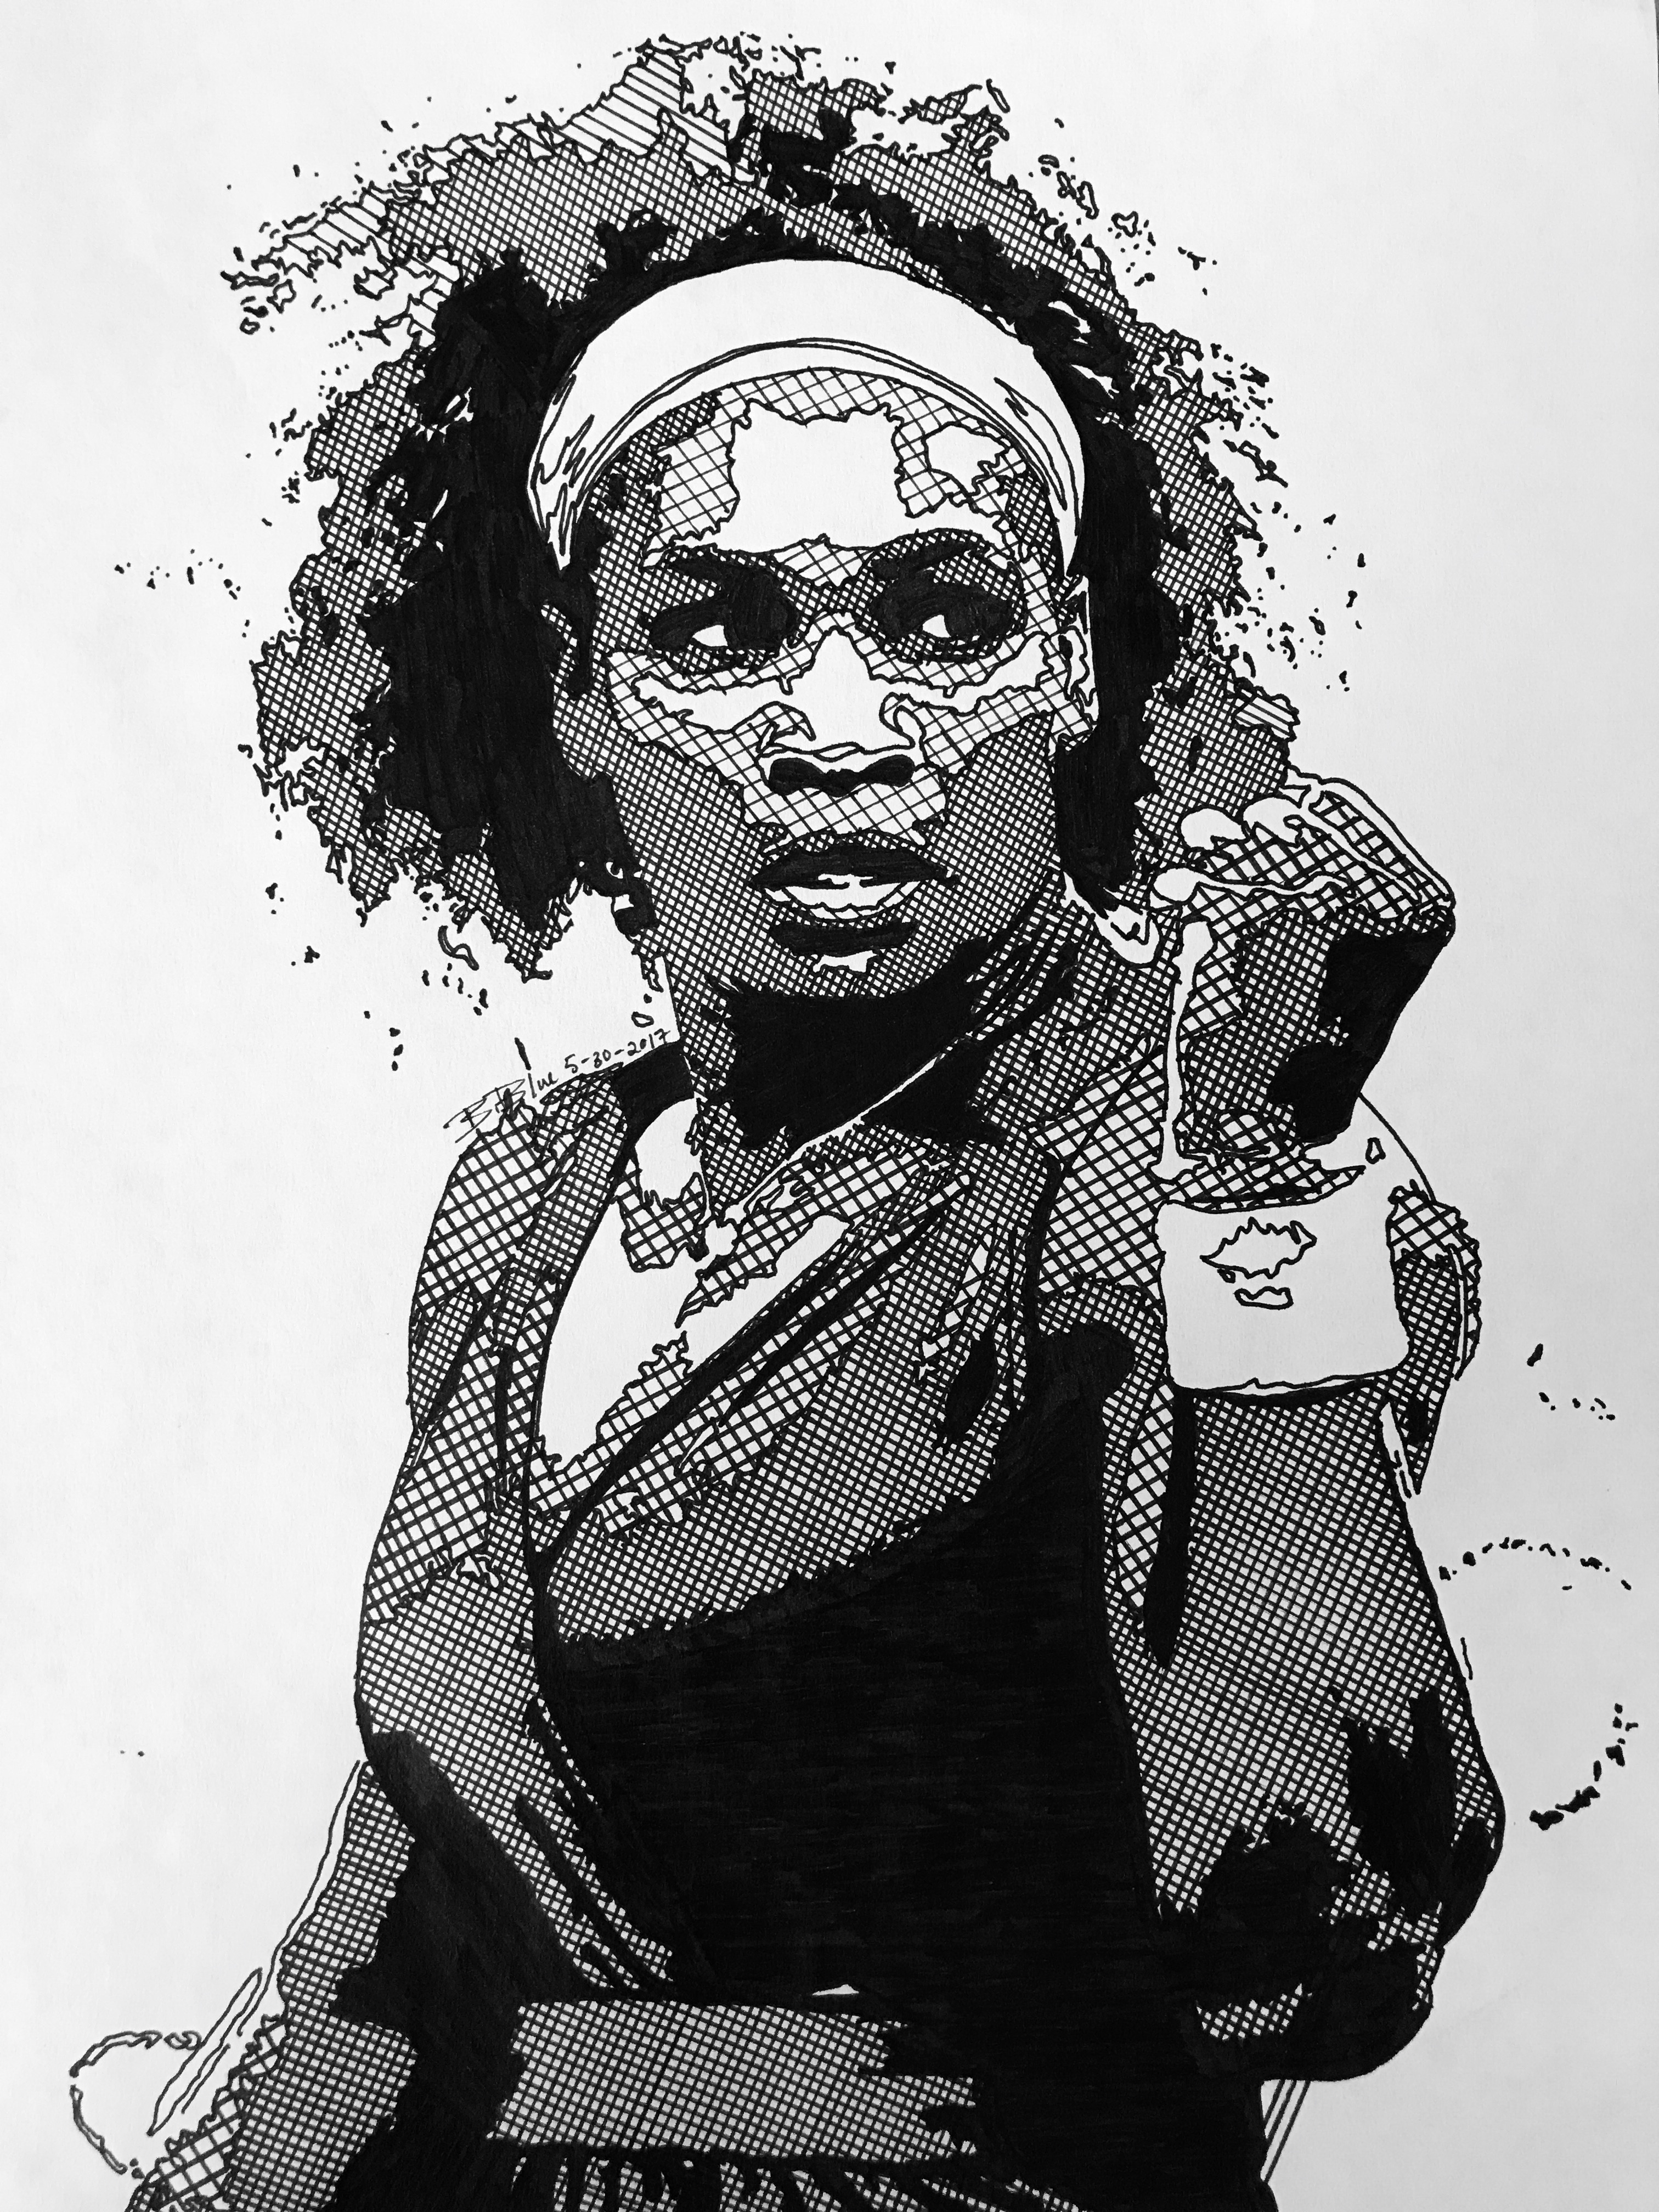 Serena Williams - The G.O.A.T.